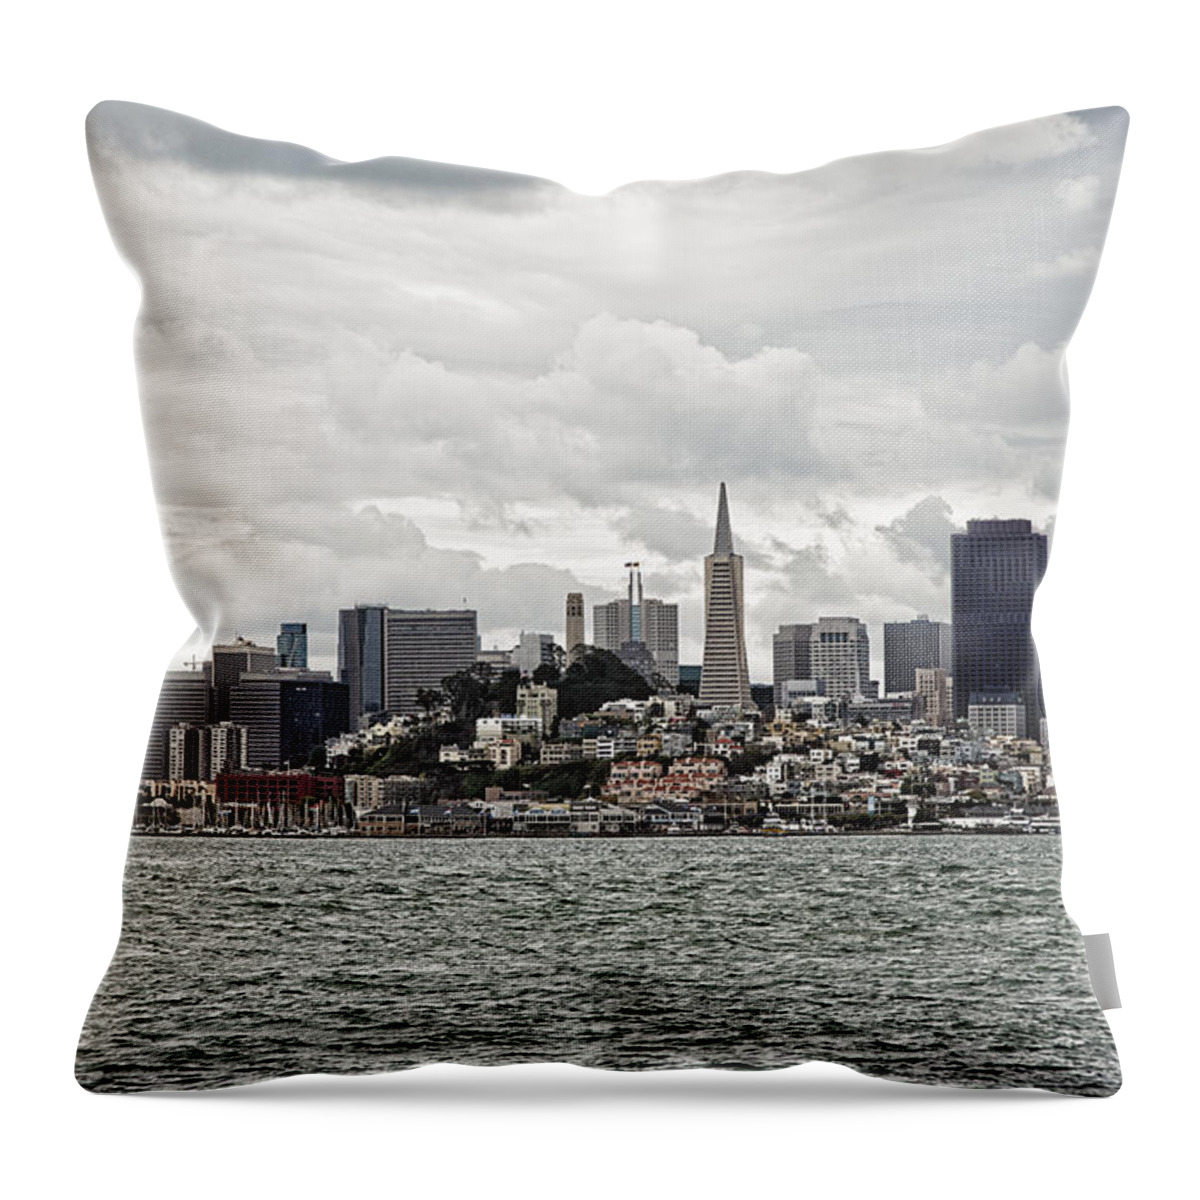 San Fransisco Skyline Throw Pillow featuring the photograph San fransisco skyline by Camille Lopez